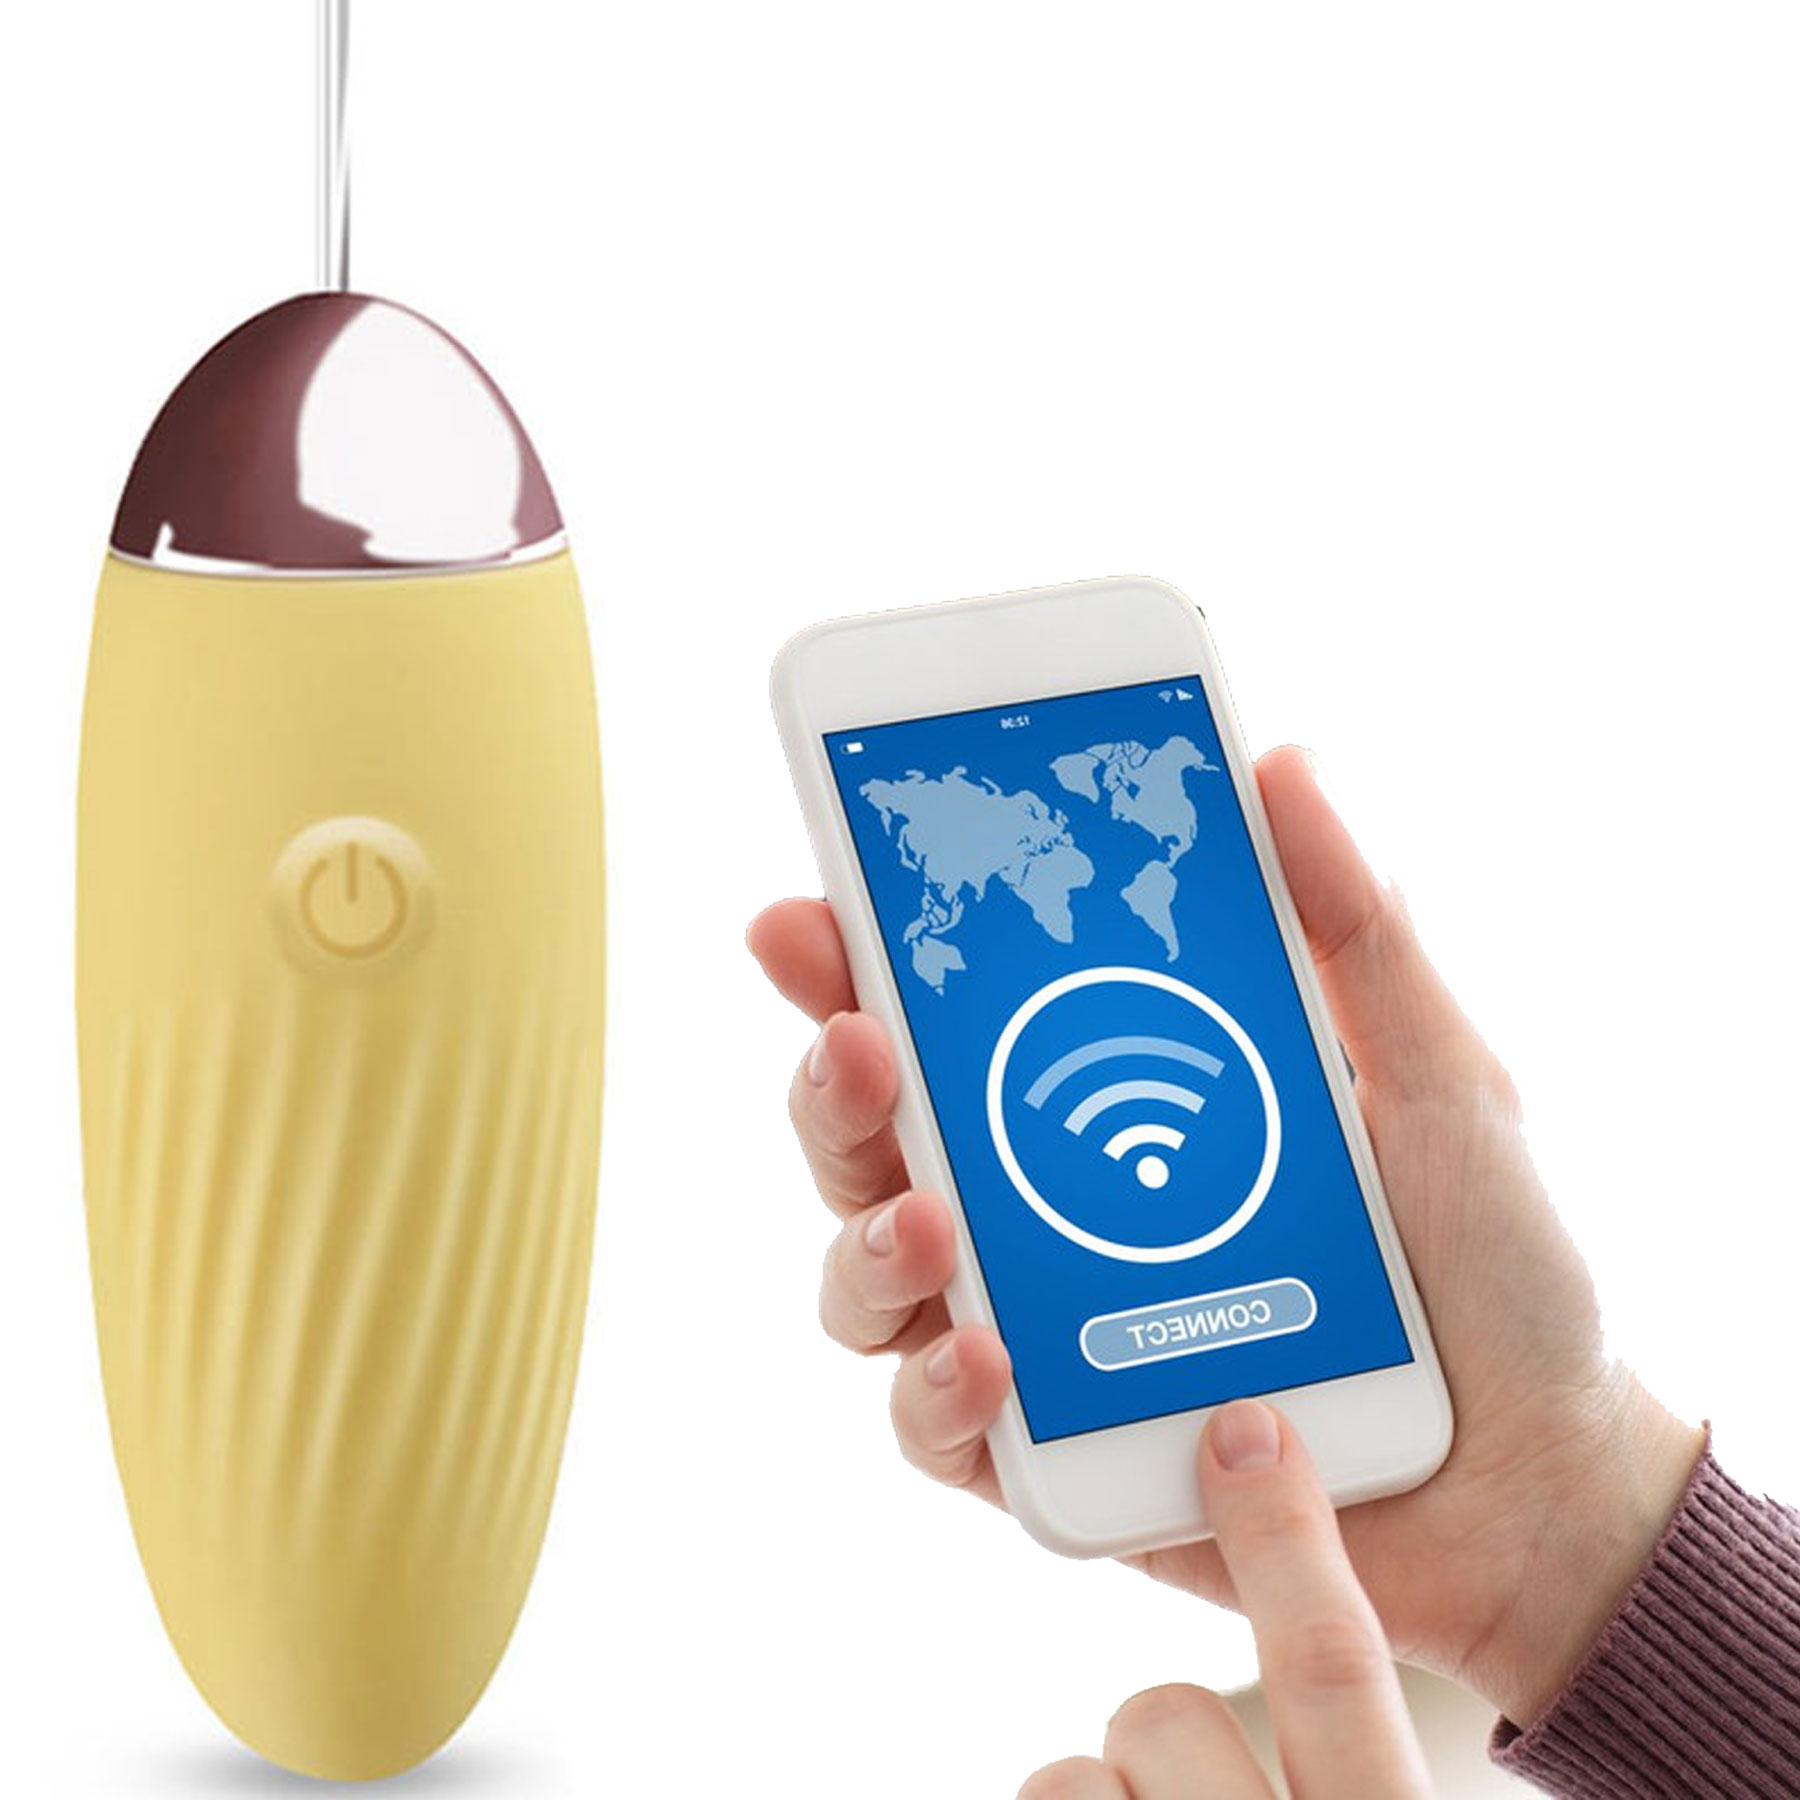 Censan AppToyz Egg Akıllı Telefon Uyumlu Vibrator C-1083